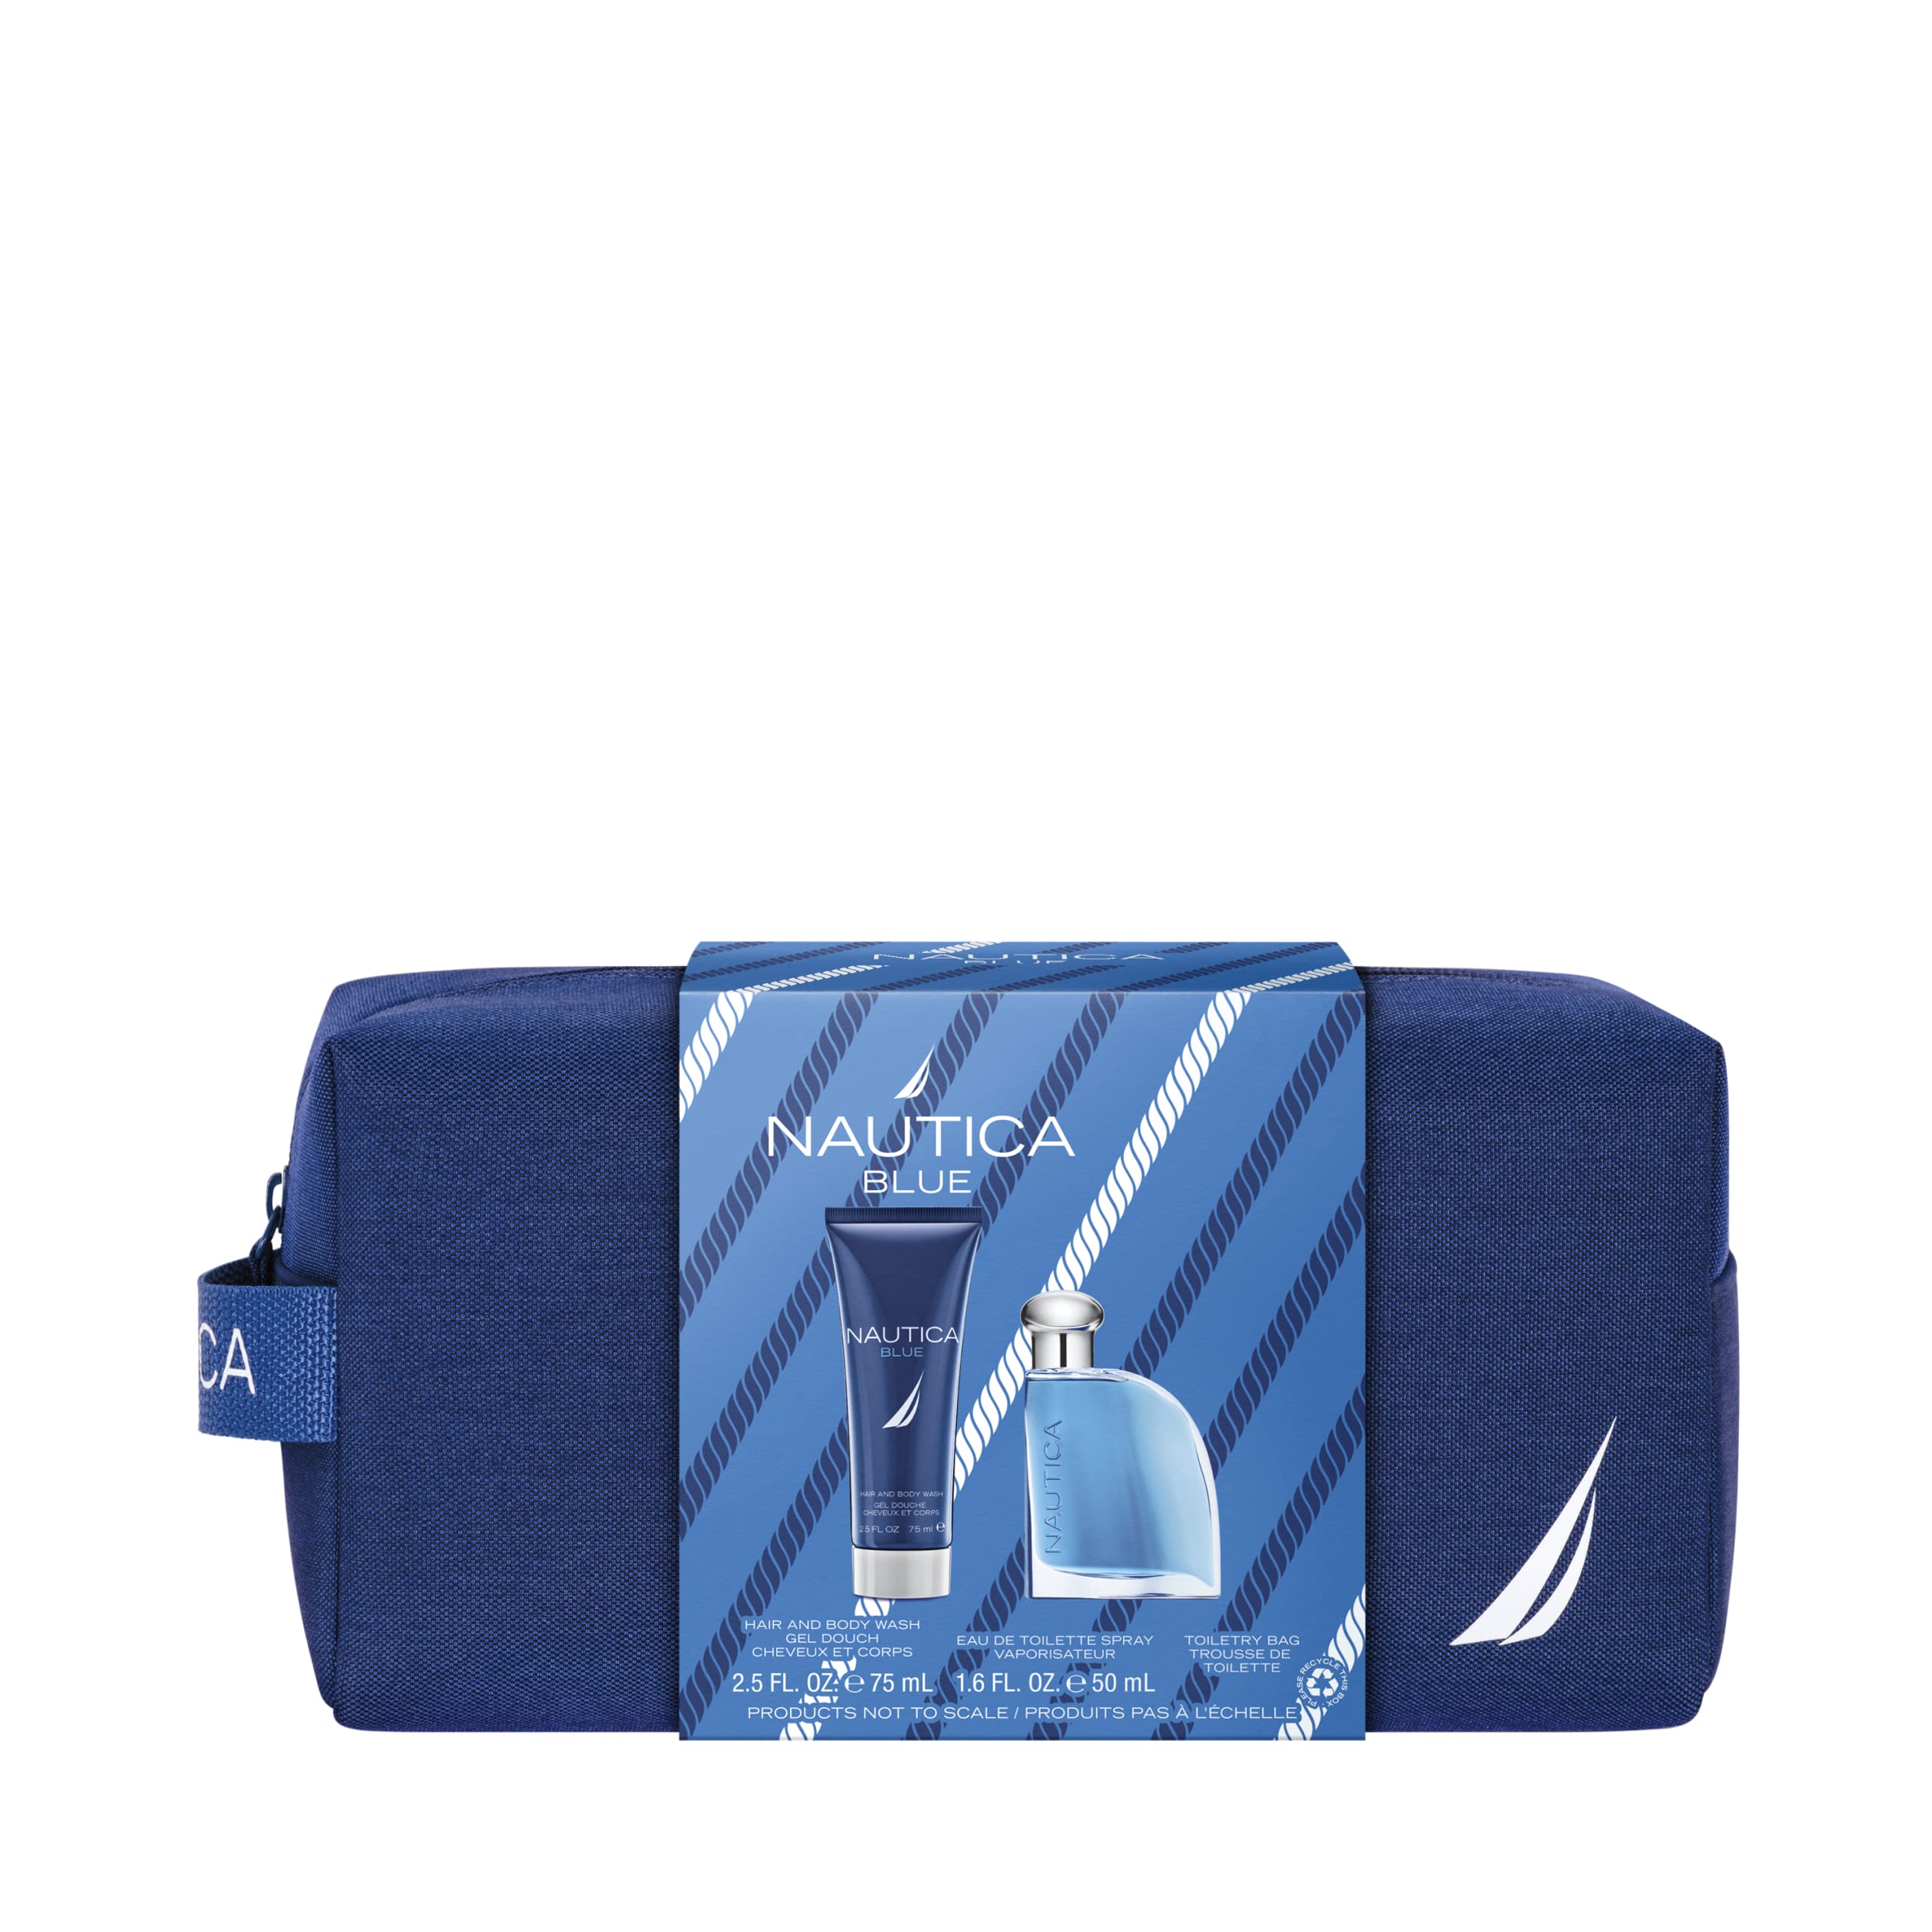 Nautica Blue 3 piece Gift Set for Men - 1.6 oz Eau De Toilette Spray + 2.5 oz Hair and Body Wash + Toiletry Bag